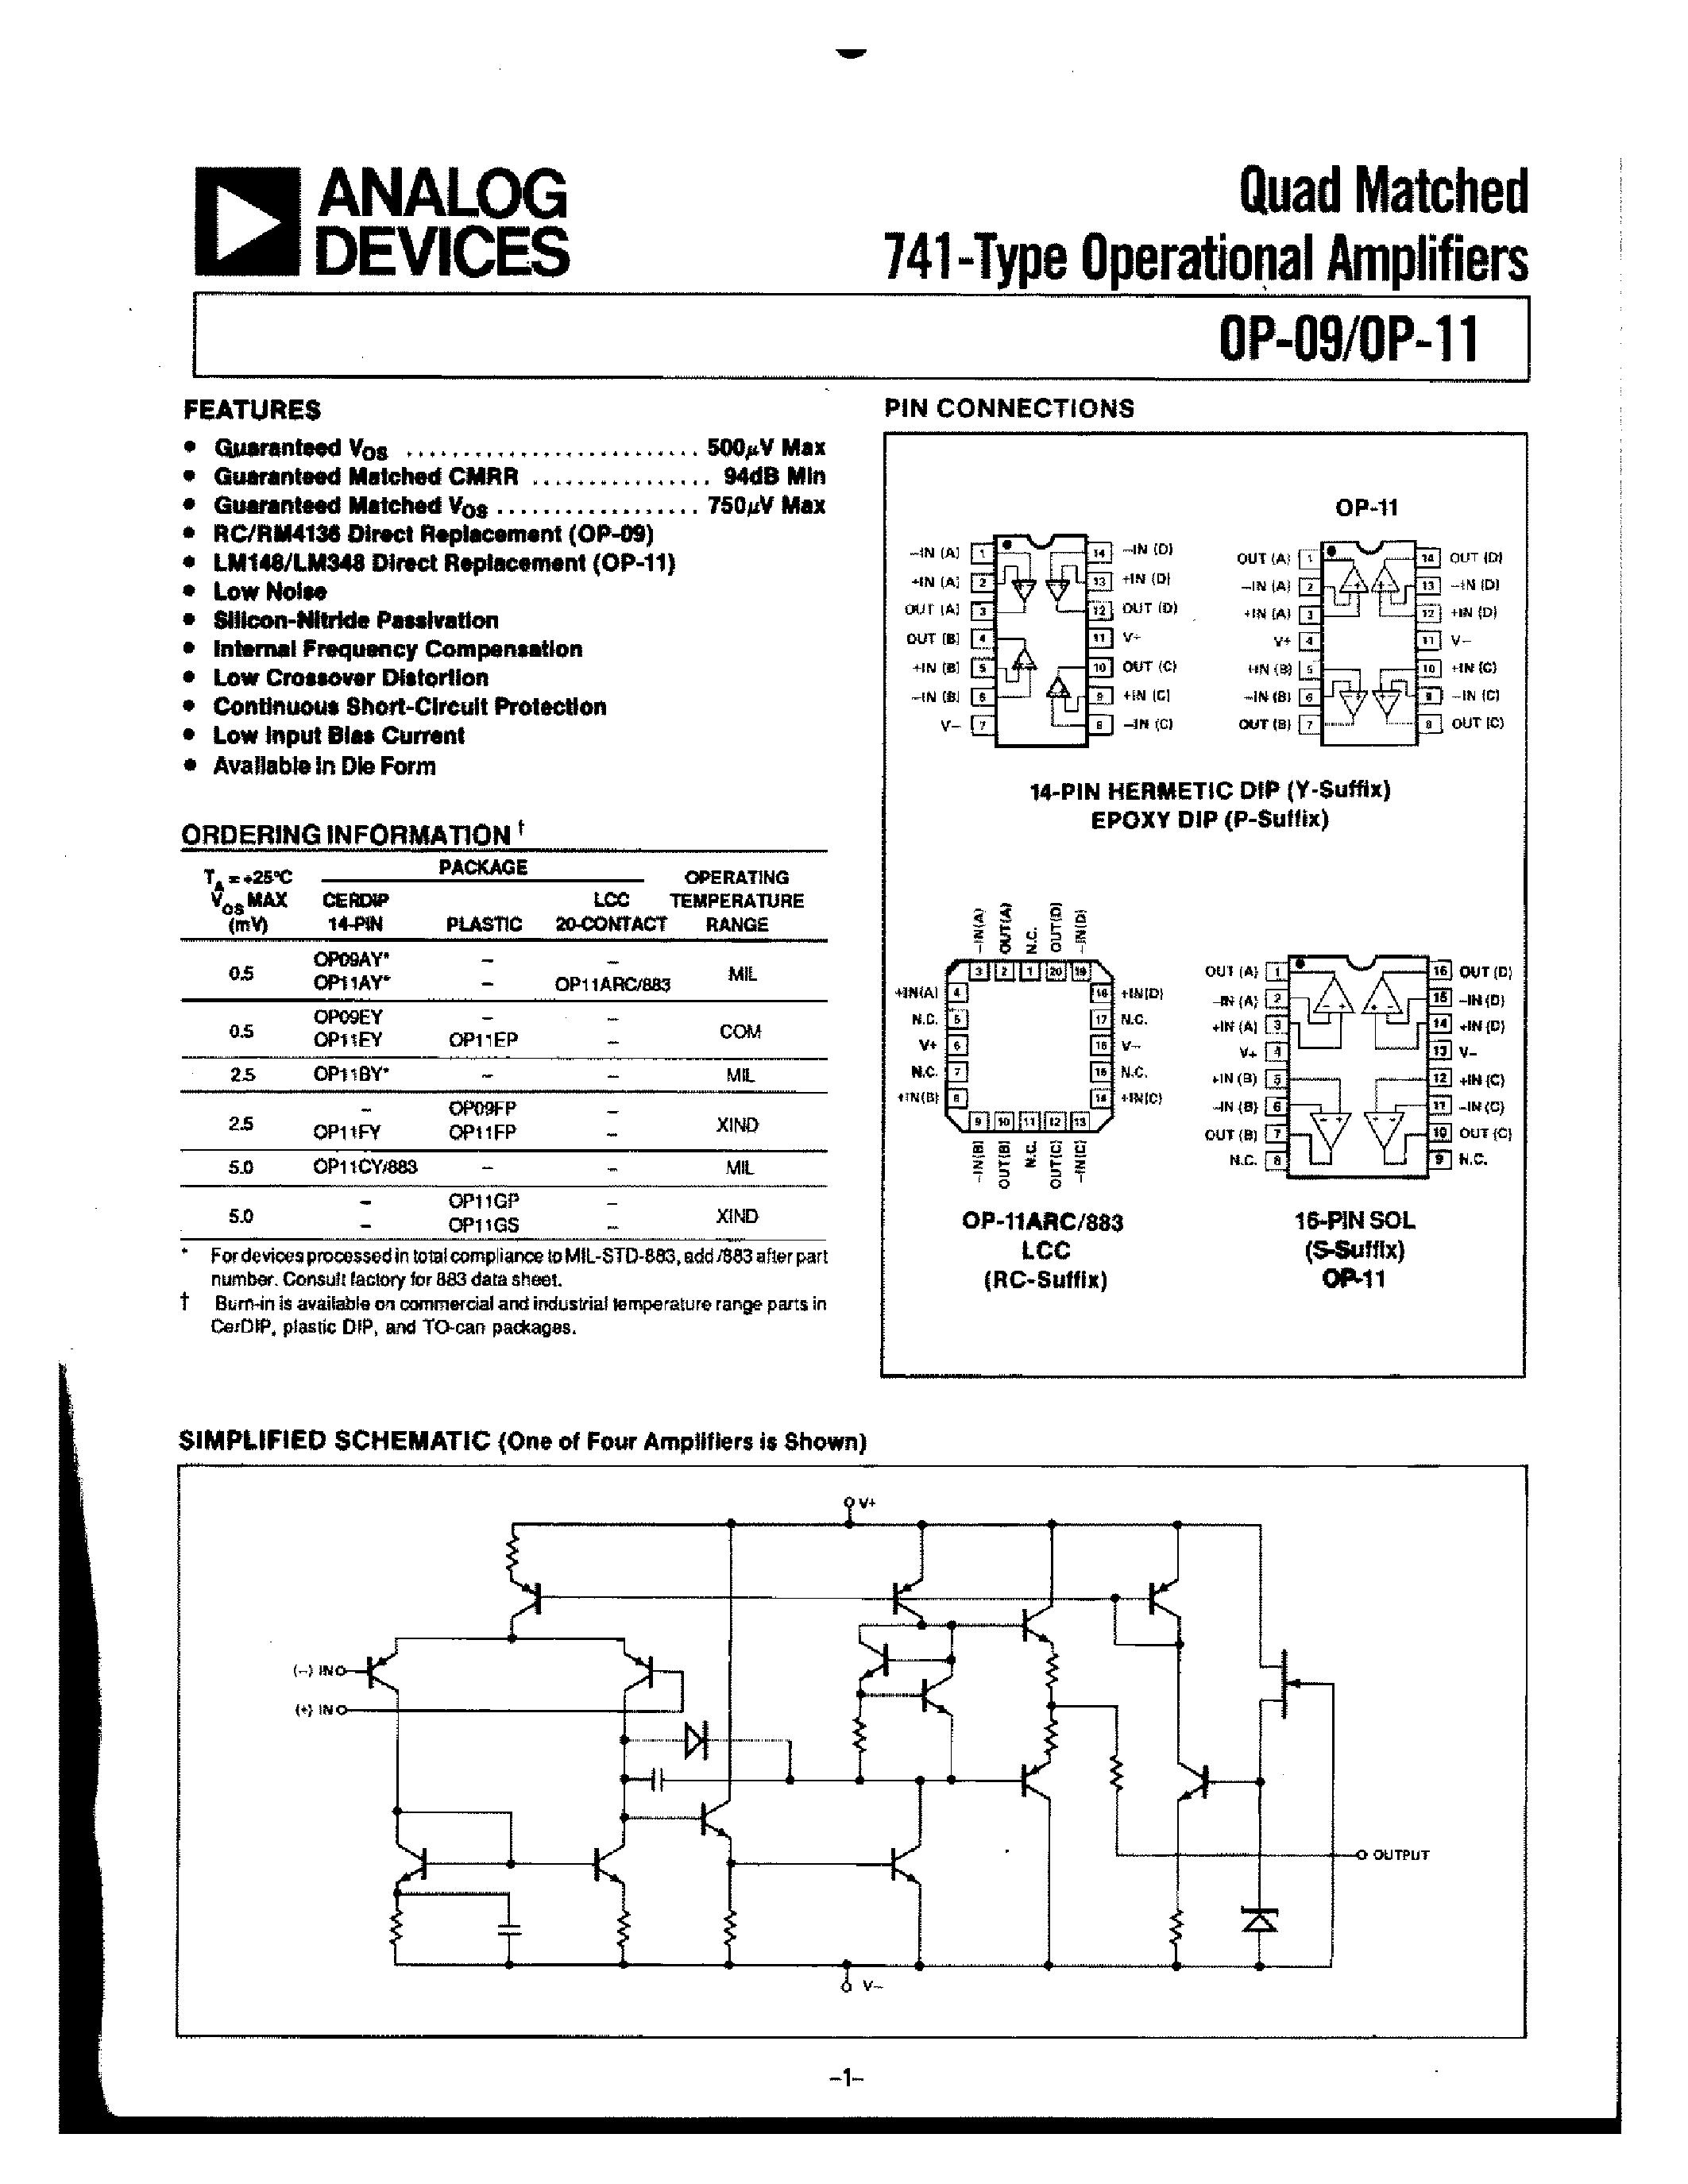 Даташит OP09 - Quad Matched 741-Type Operational Amplifiers страница 1